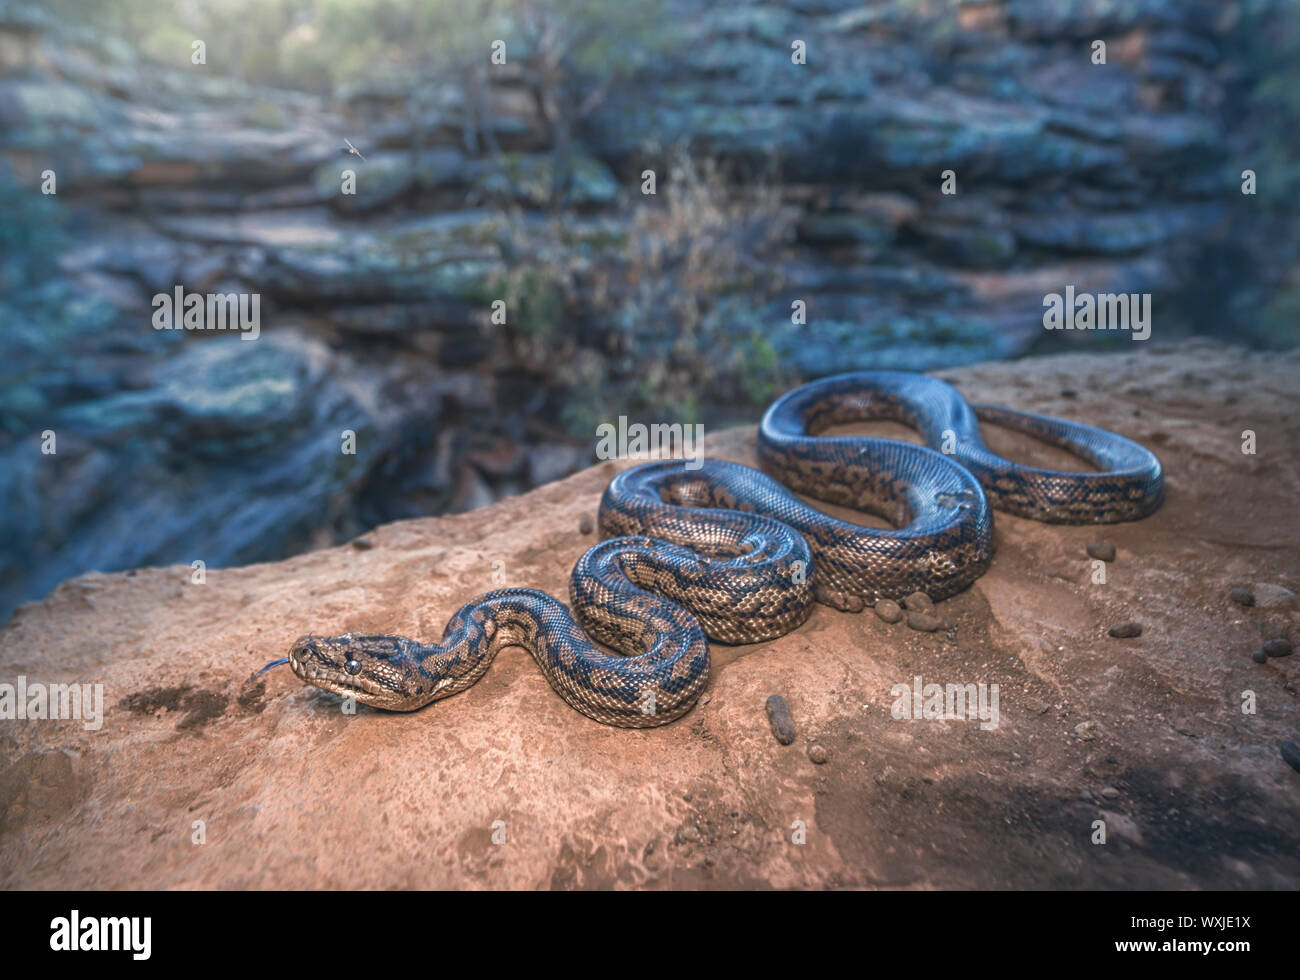 Murray Darling carpet python (Morelia spilota metcalfei) on rocks by a river, Australia Stock Photo